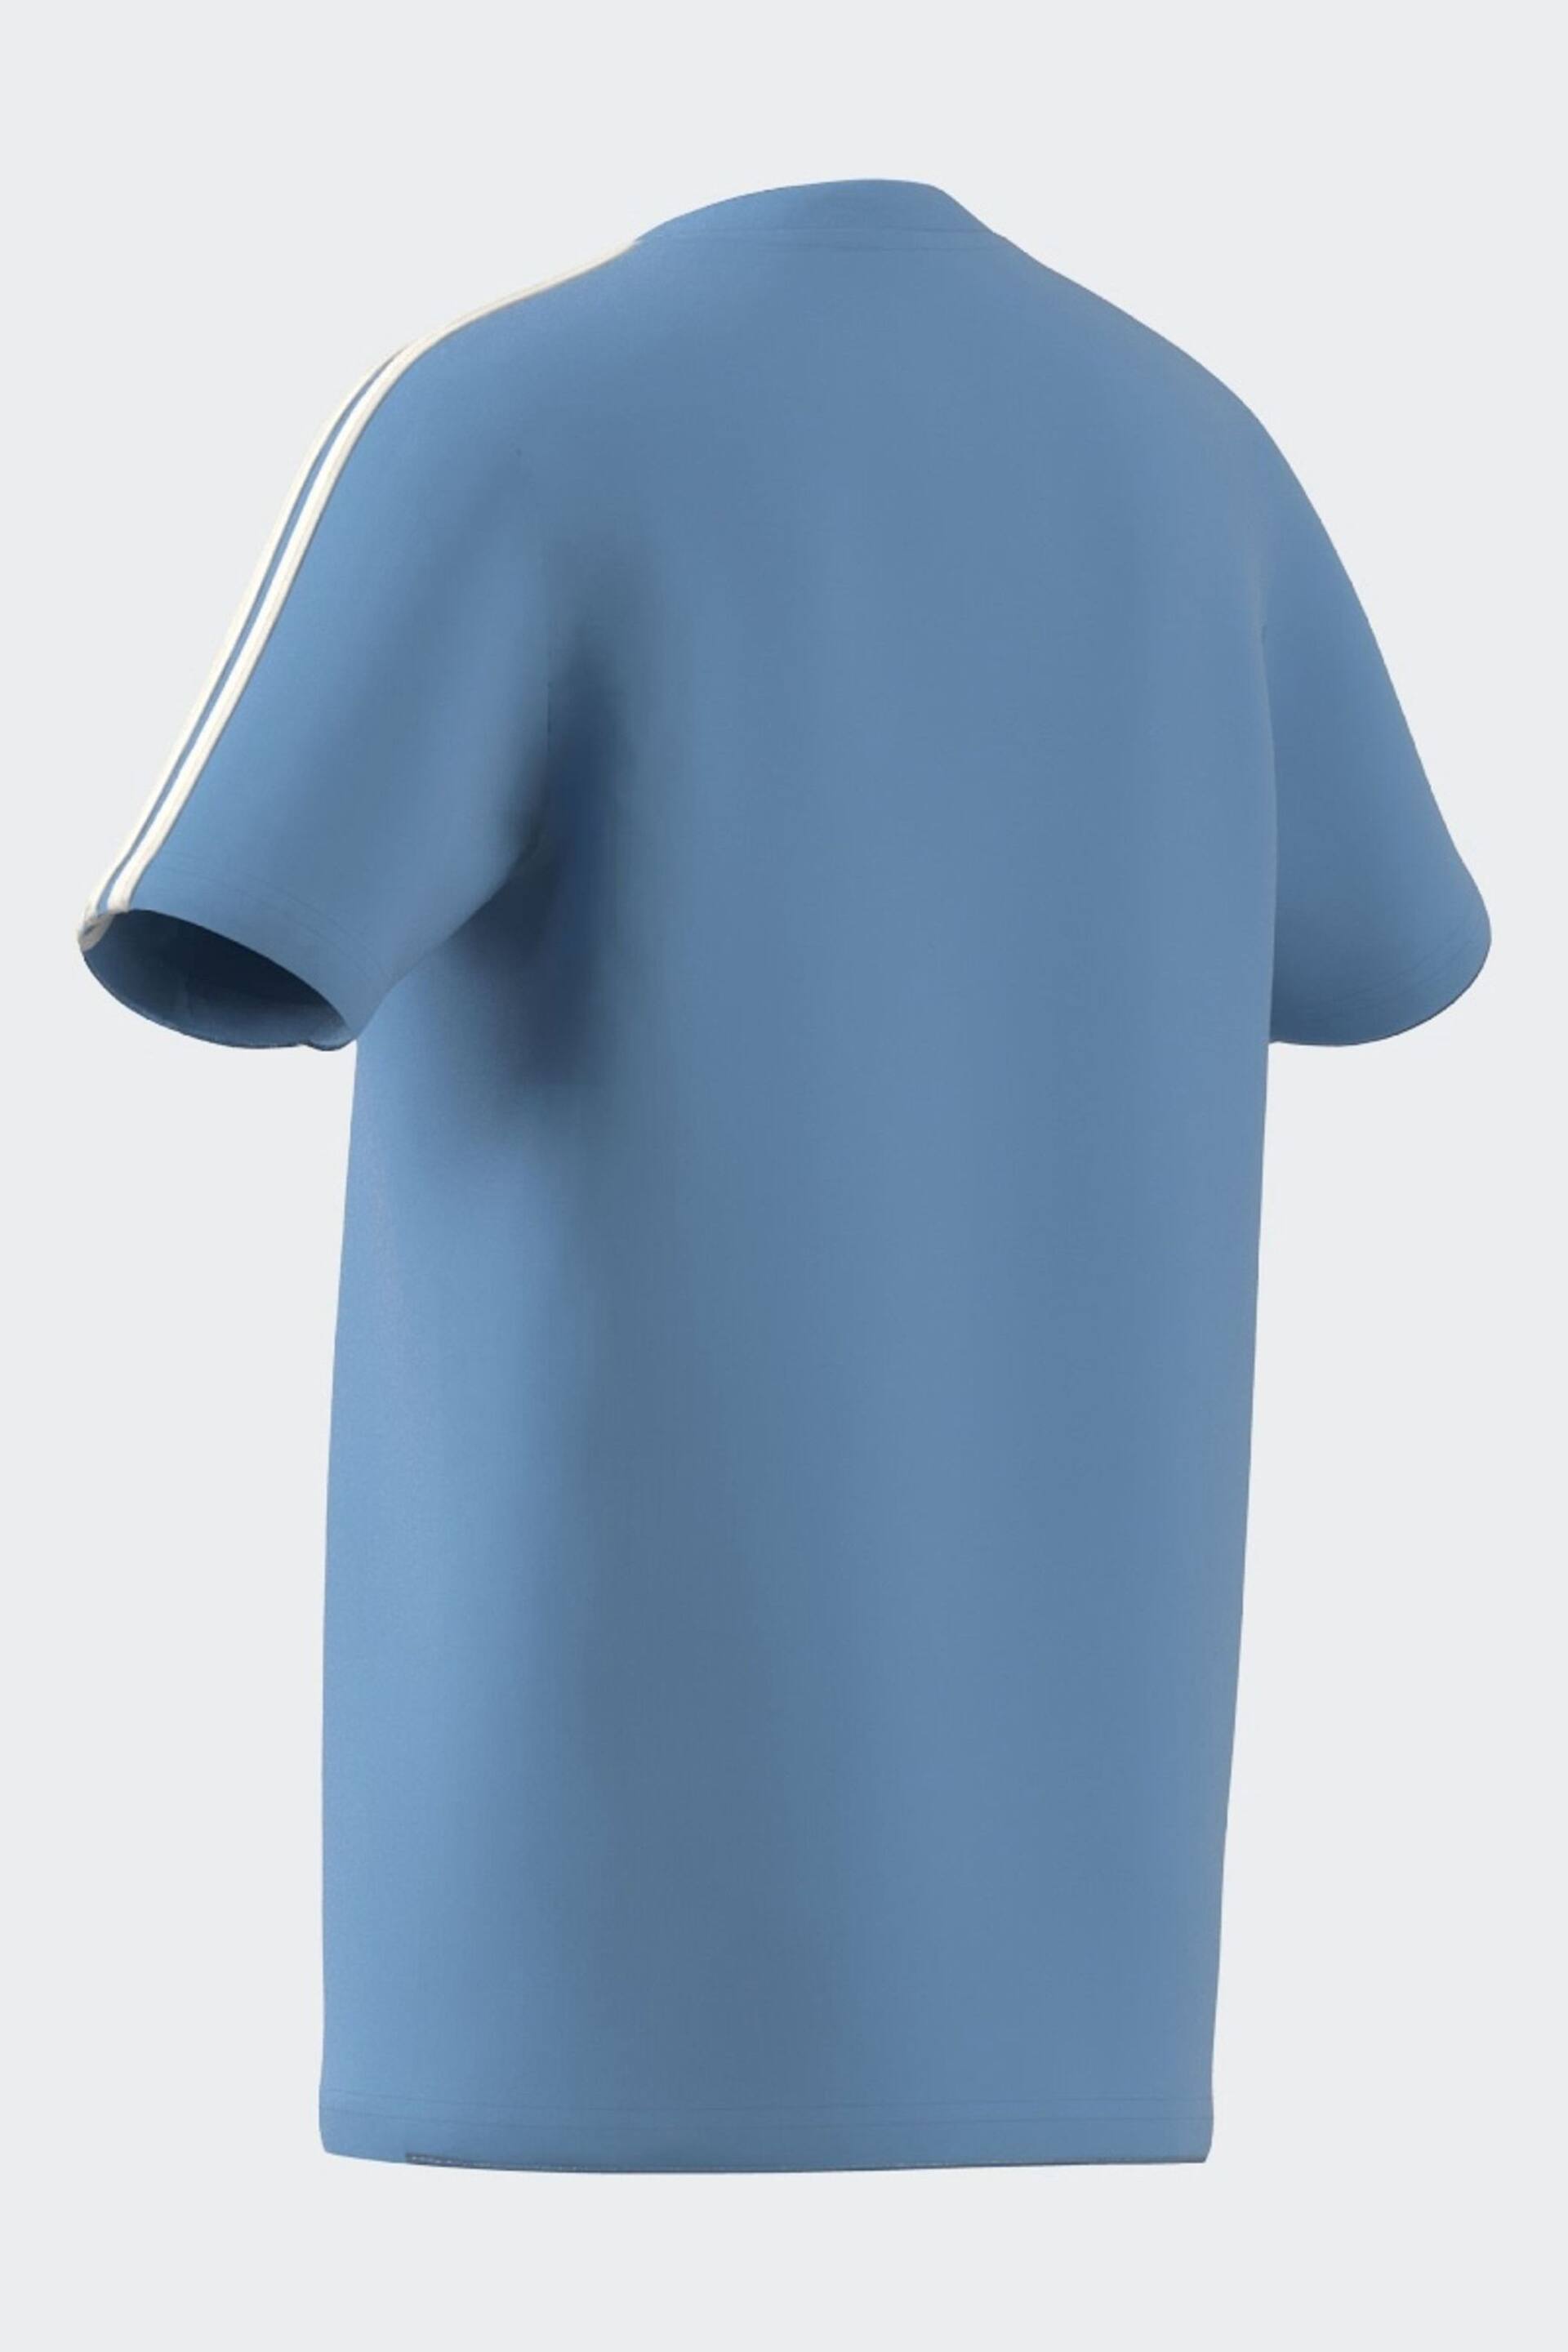 adidas Navy Blue Essentials 3-Stripes Cotton T-Shirt - Image 16 of 16